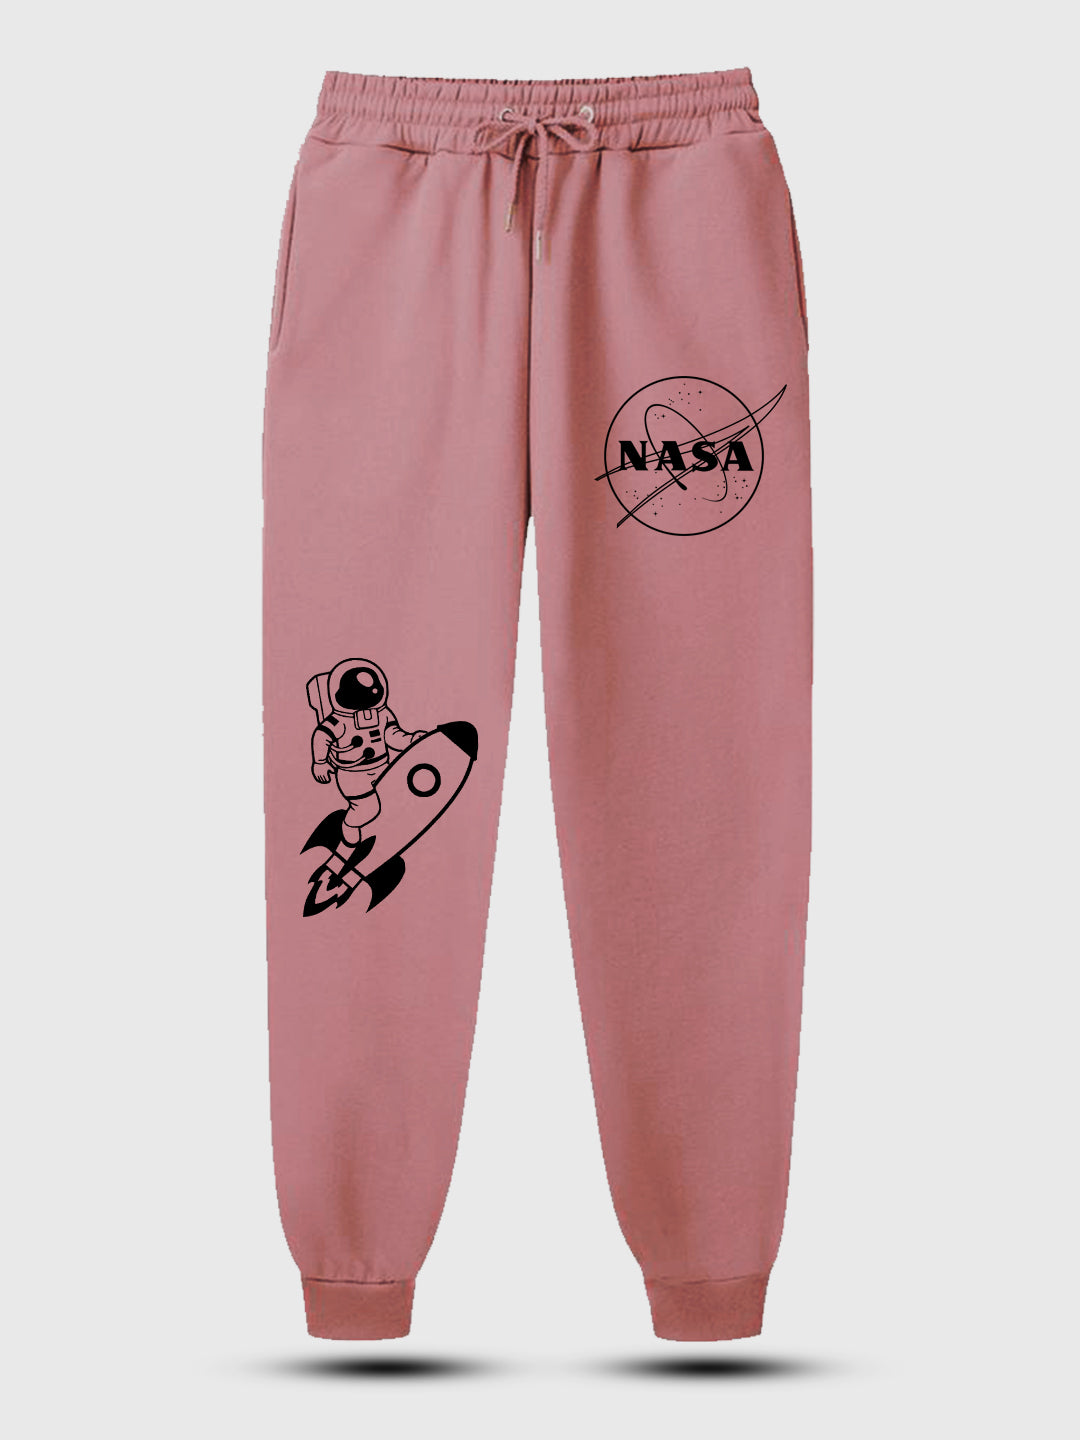 Men's Nasa Space Printed Prime Trouser